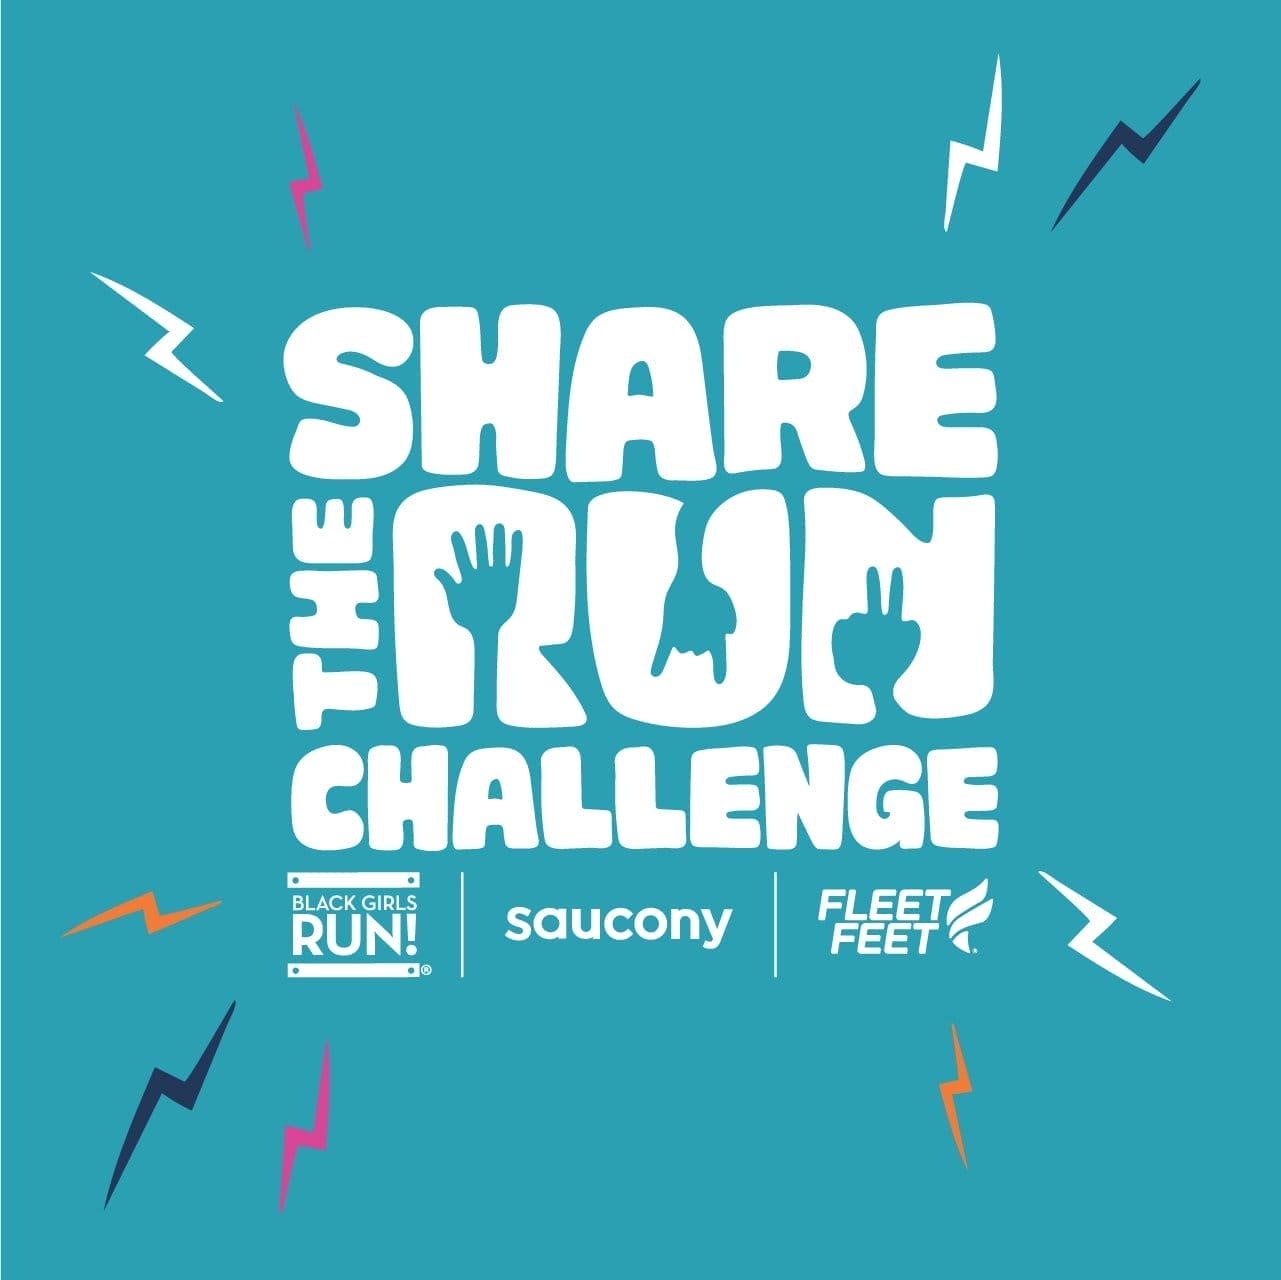 Share the Run Challenge